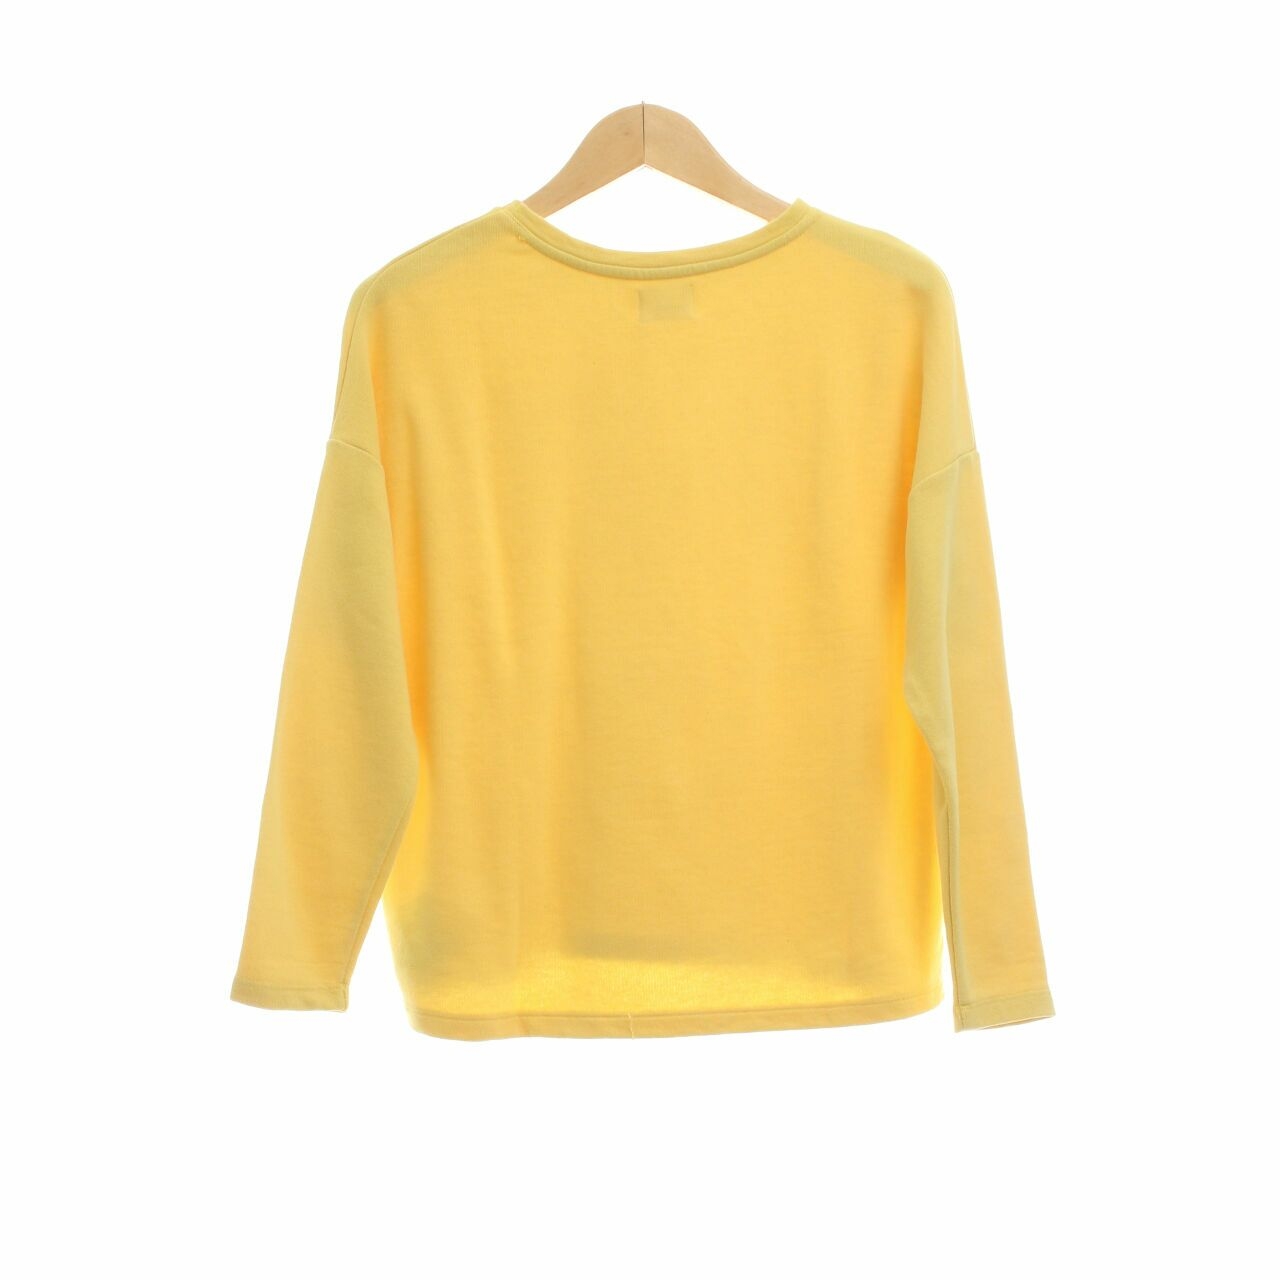 Pull & Bear Yellow Sweater